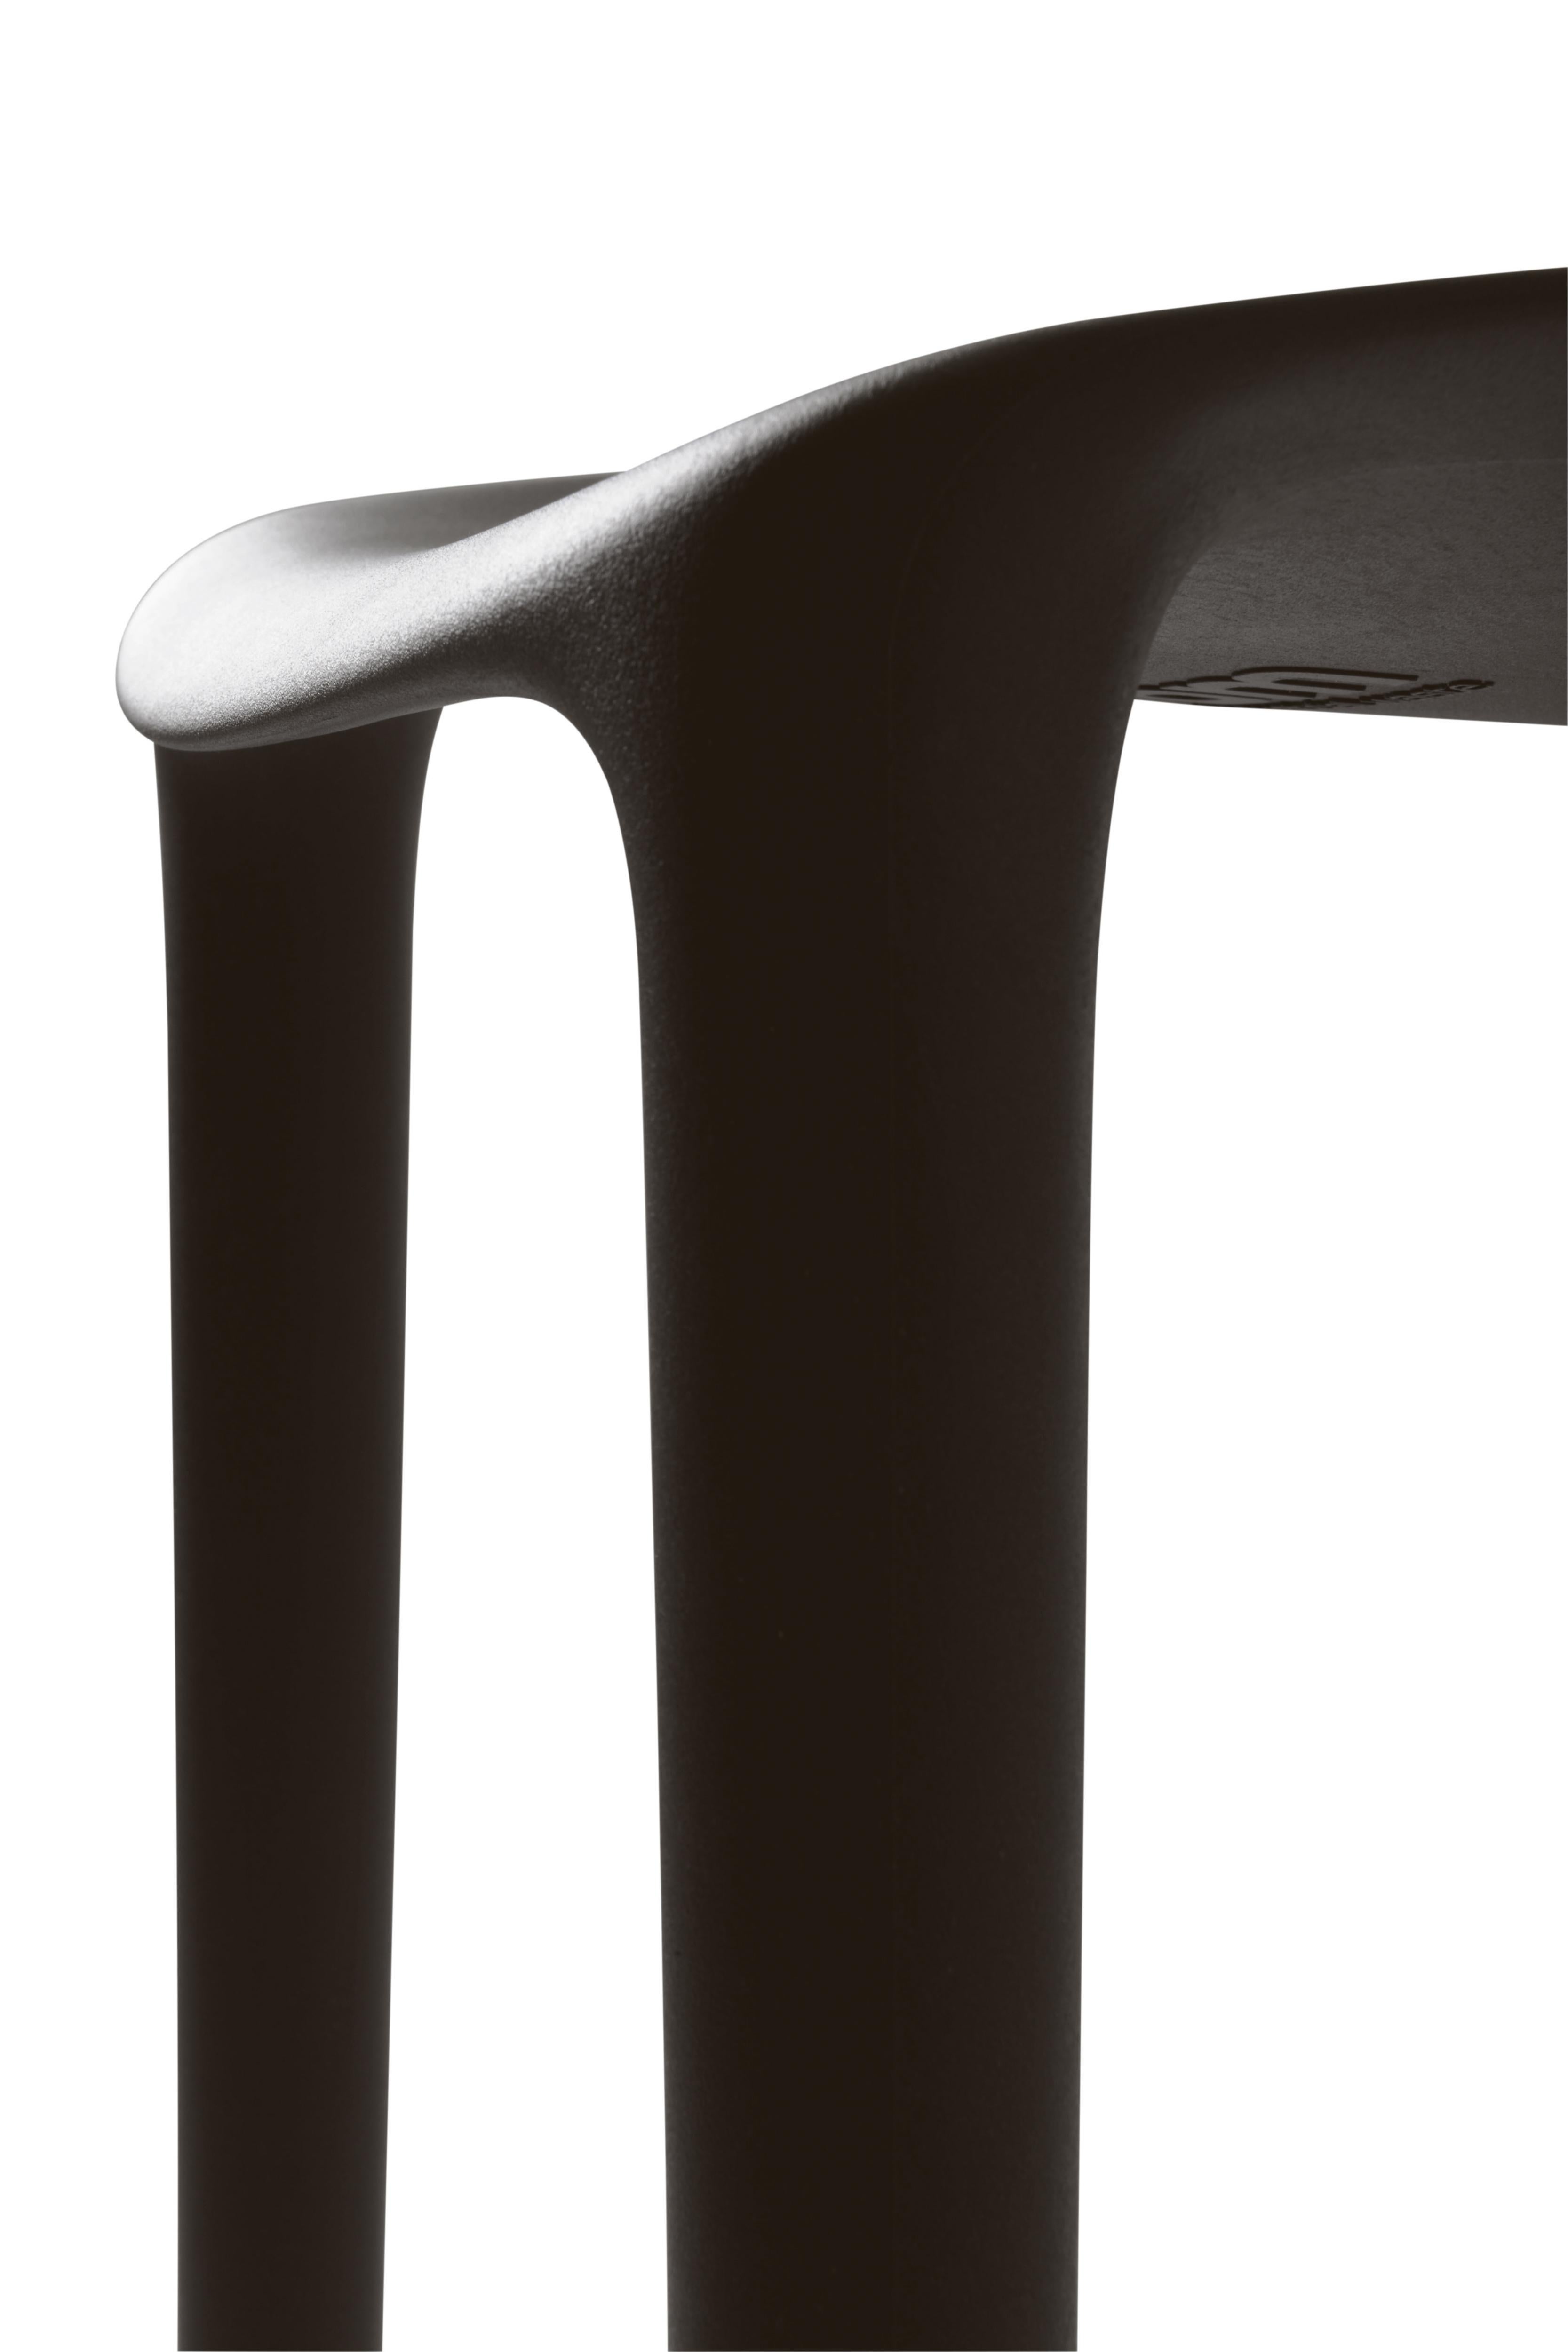 Emeco Broom Stapelbarer Stuhl in Orange von Philippe Starck (Moderne) im Angebot